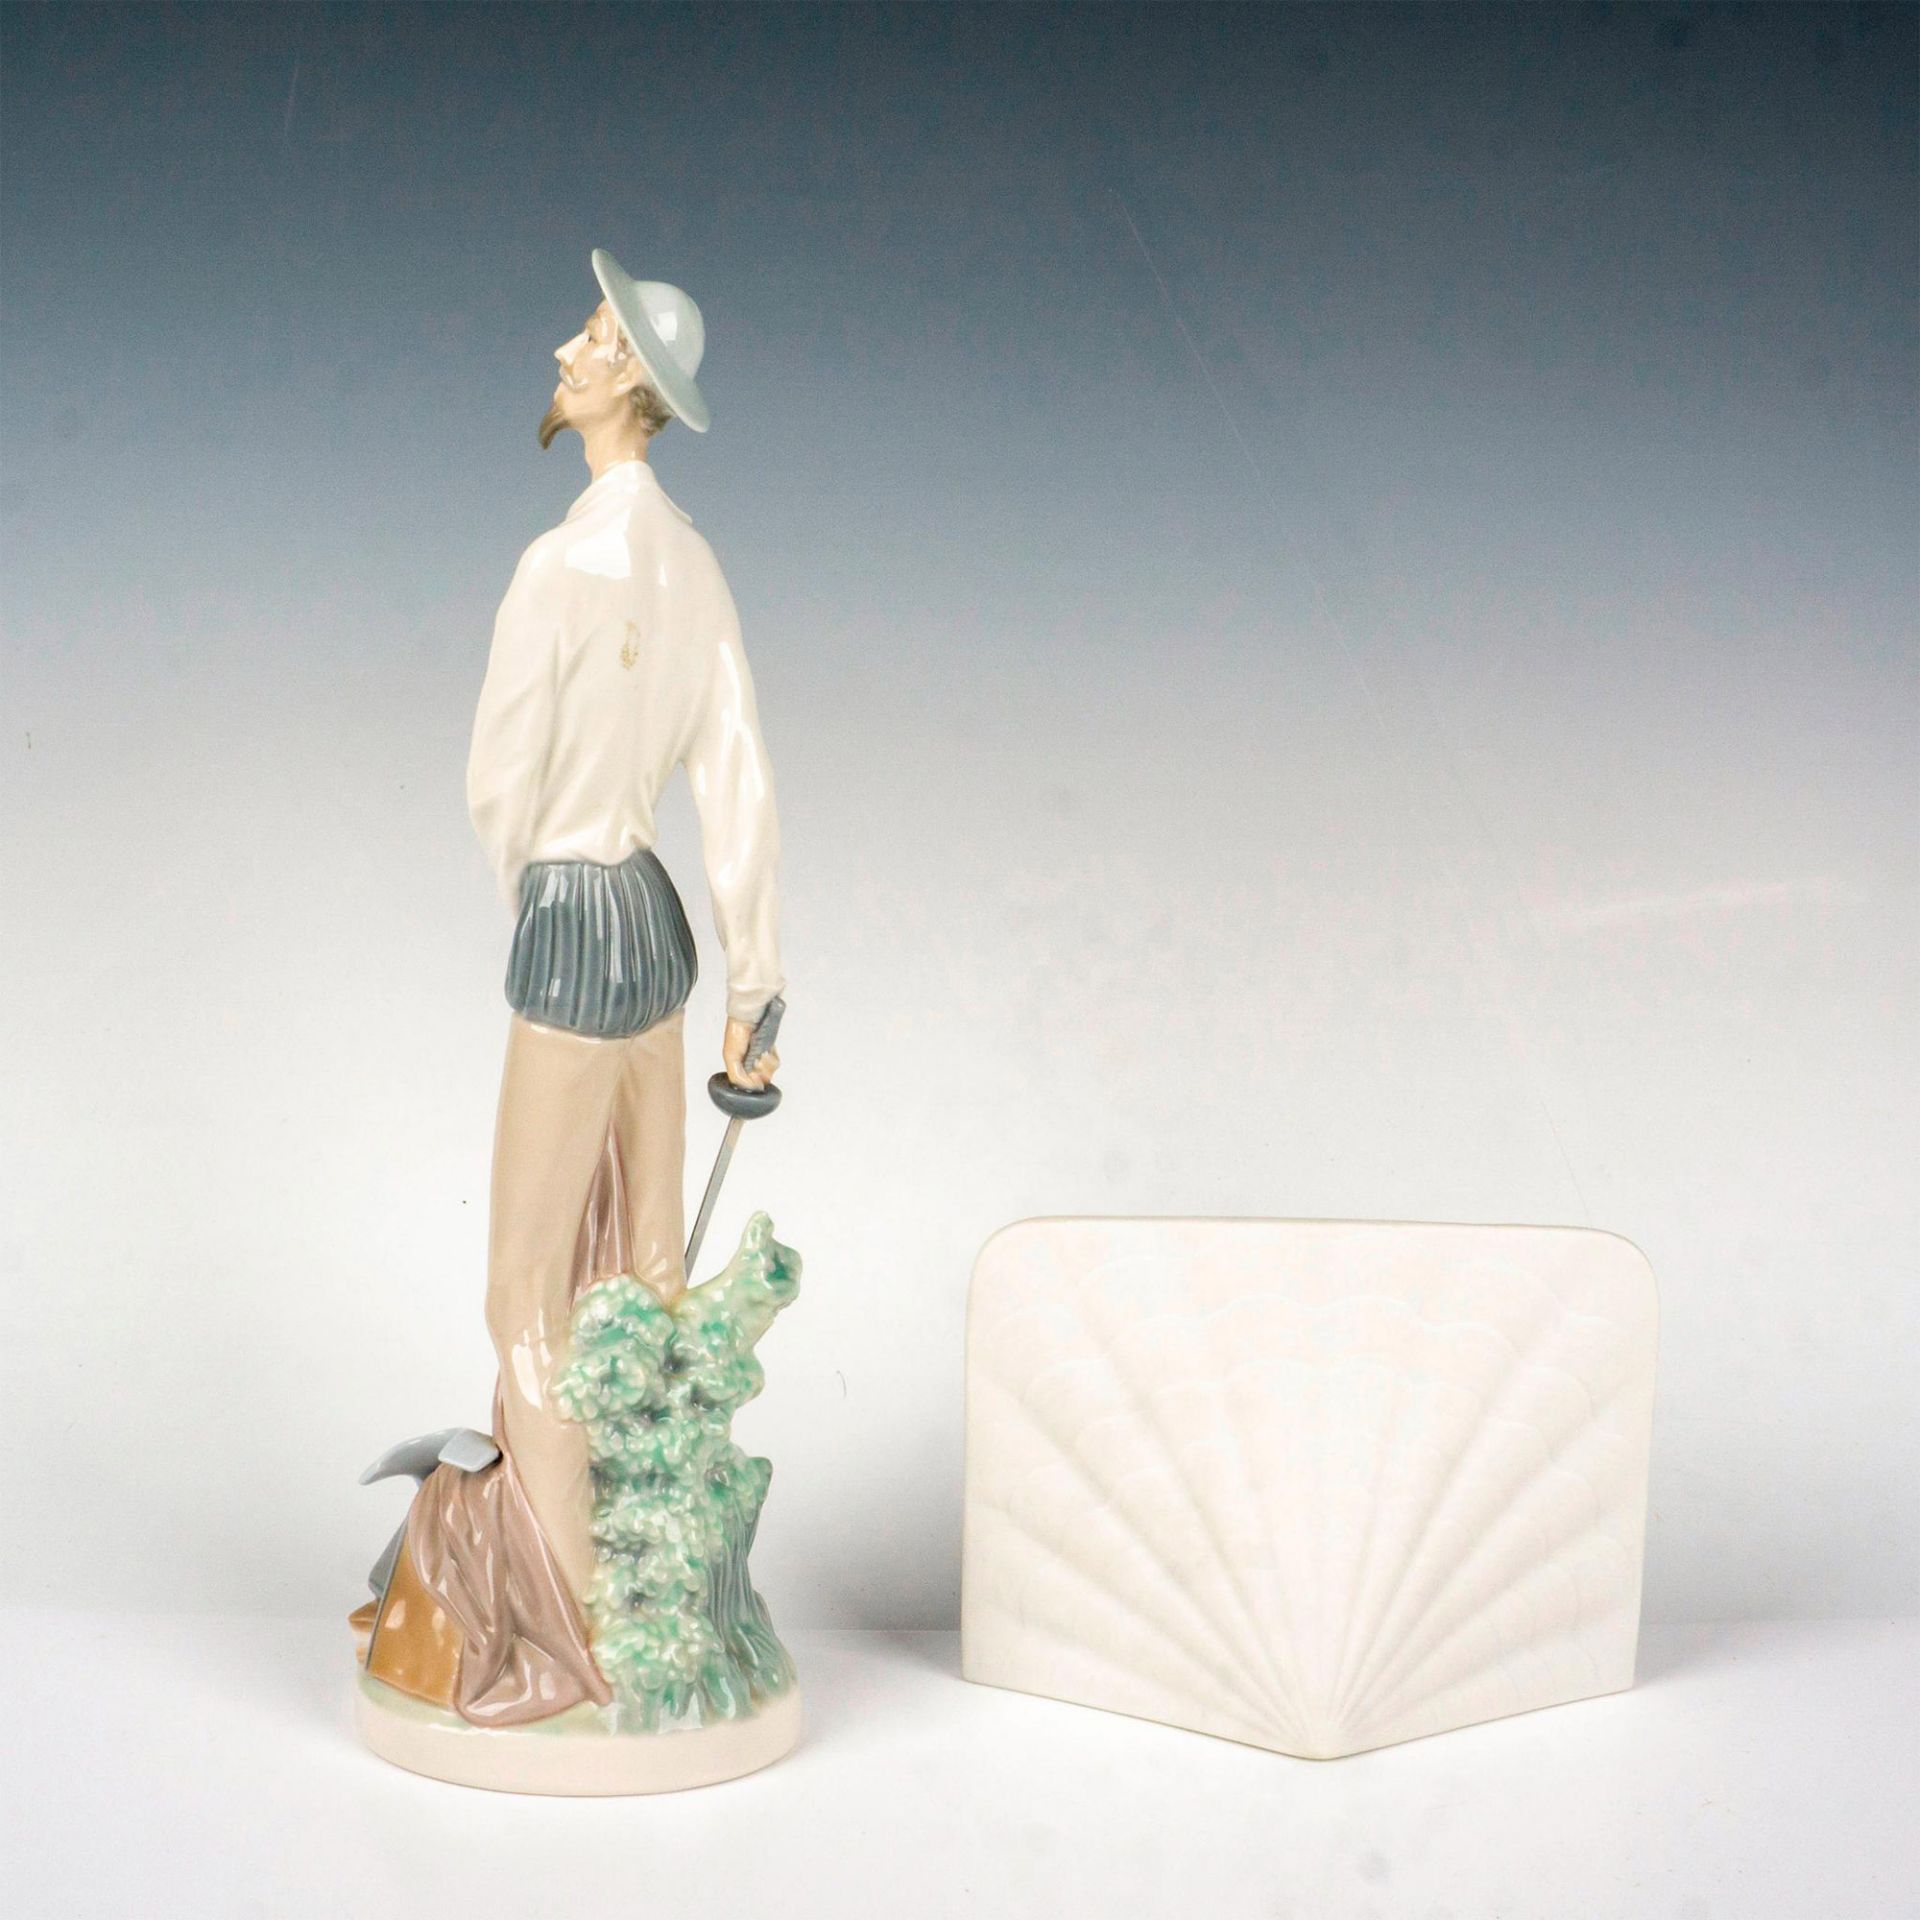 2pc Lladro Porcelain Don Quixote Figurine + Plaque - Lladro Porcelain Figurine - Image 2 of 3